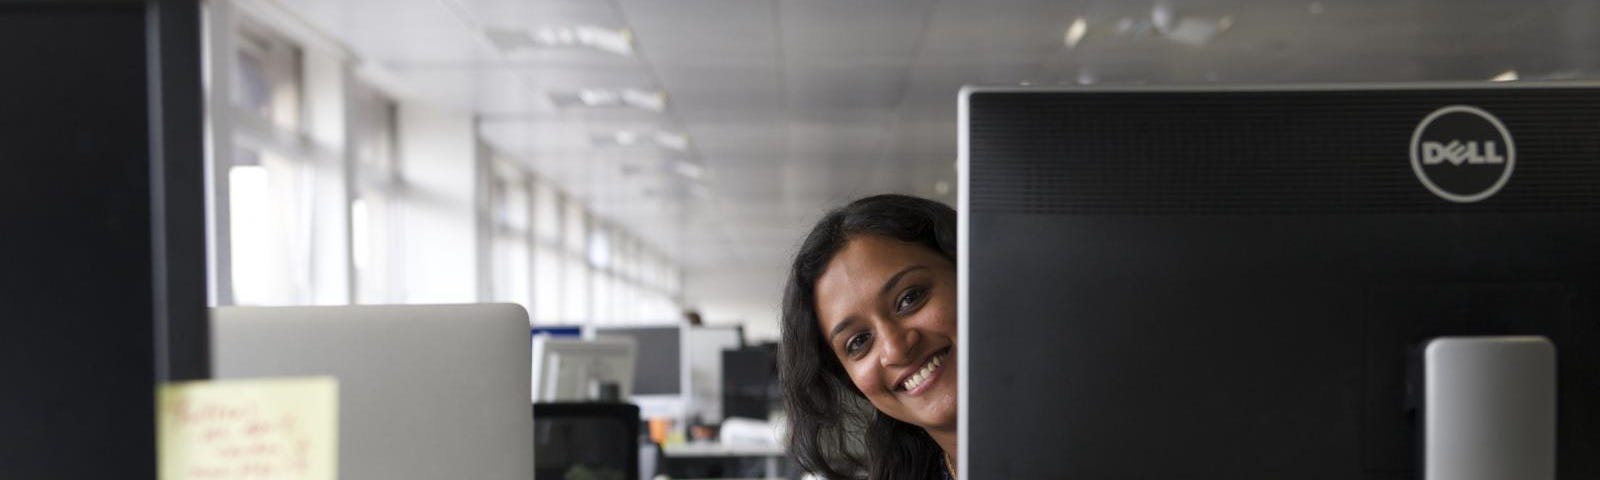 Peson peering from behind a desktop, smiling